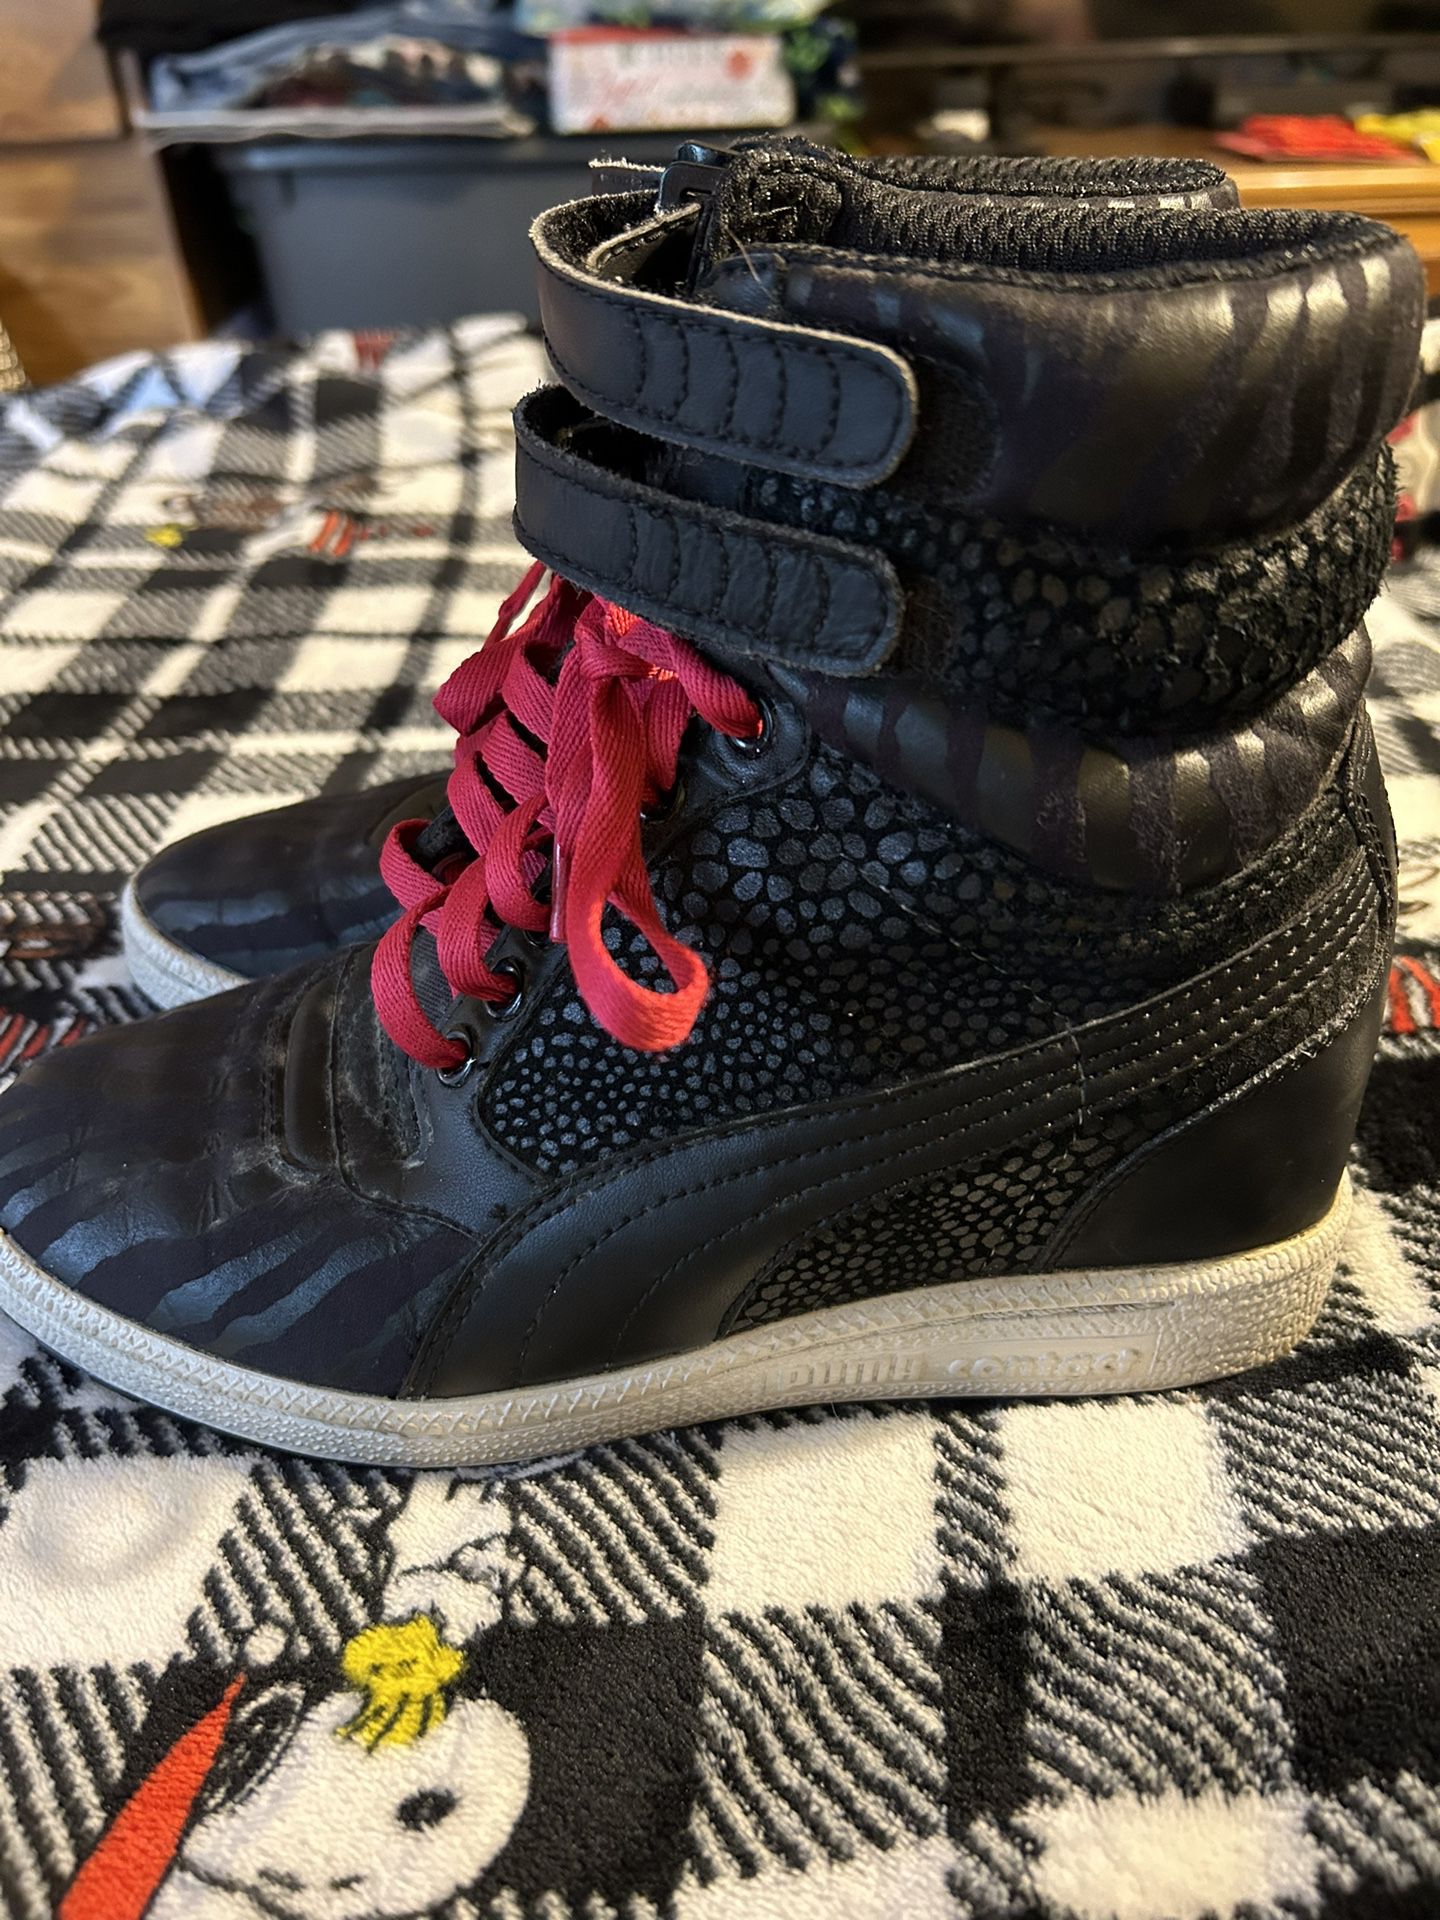 Puma SKY HI 355798 03 Womens Size 6 Black Leather Reptile Wedge Sneakers